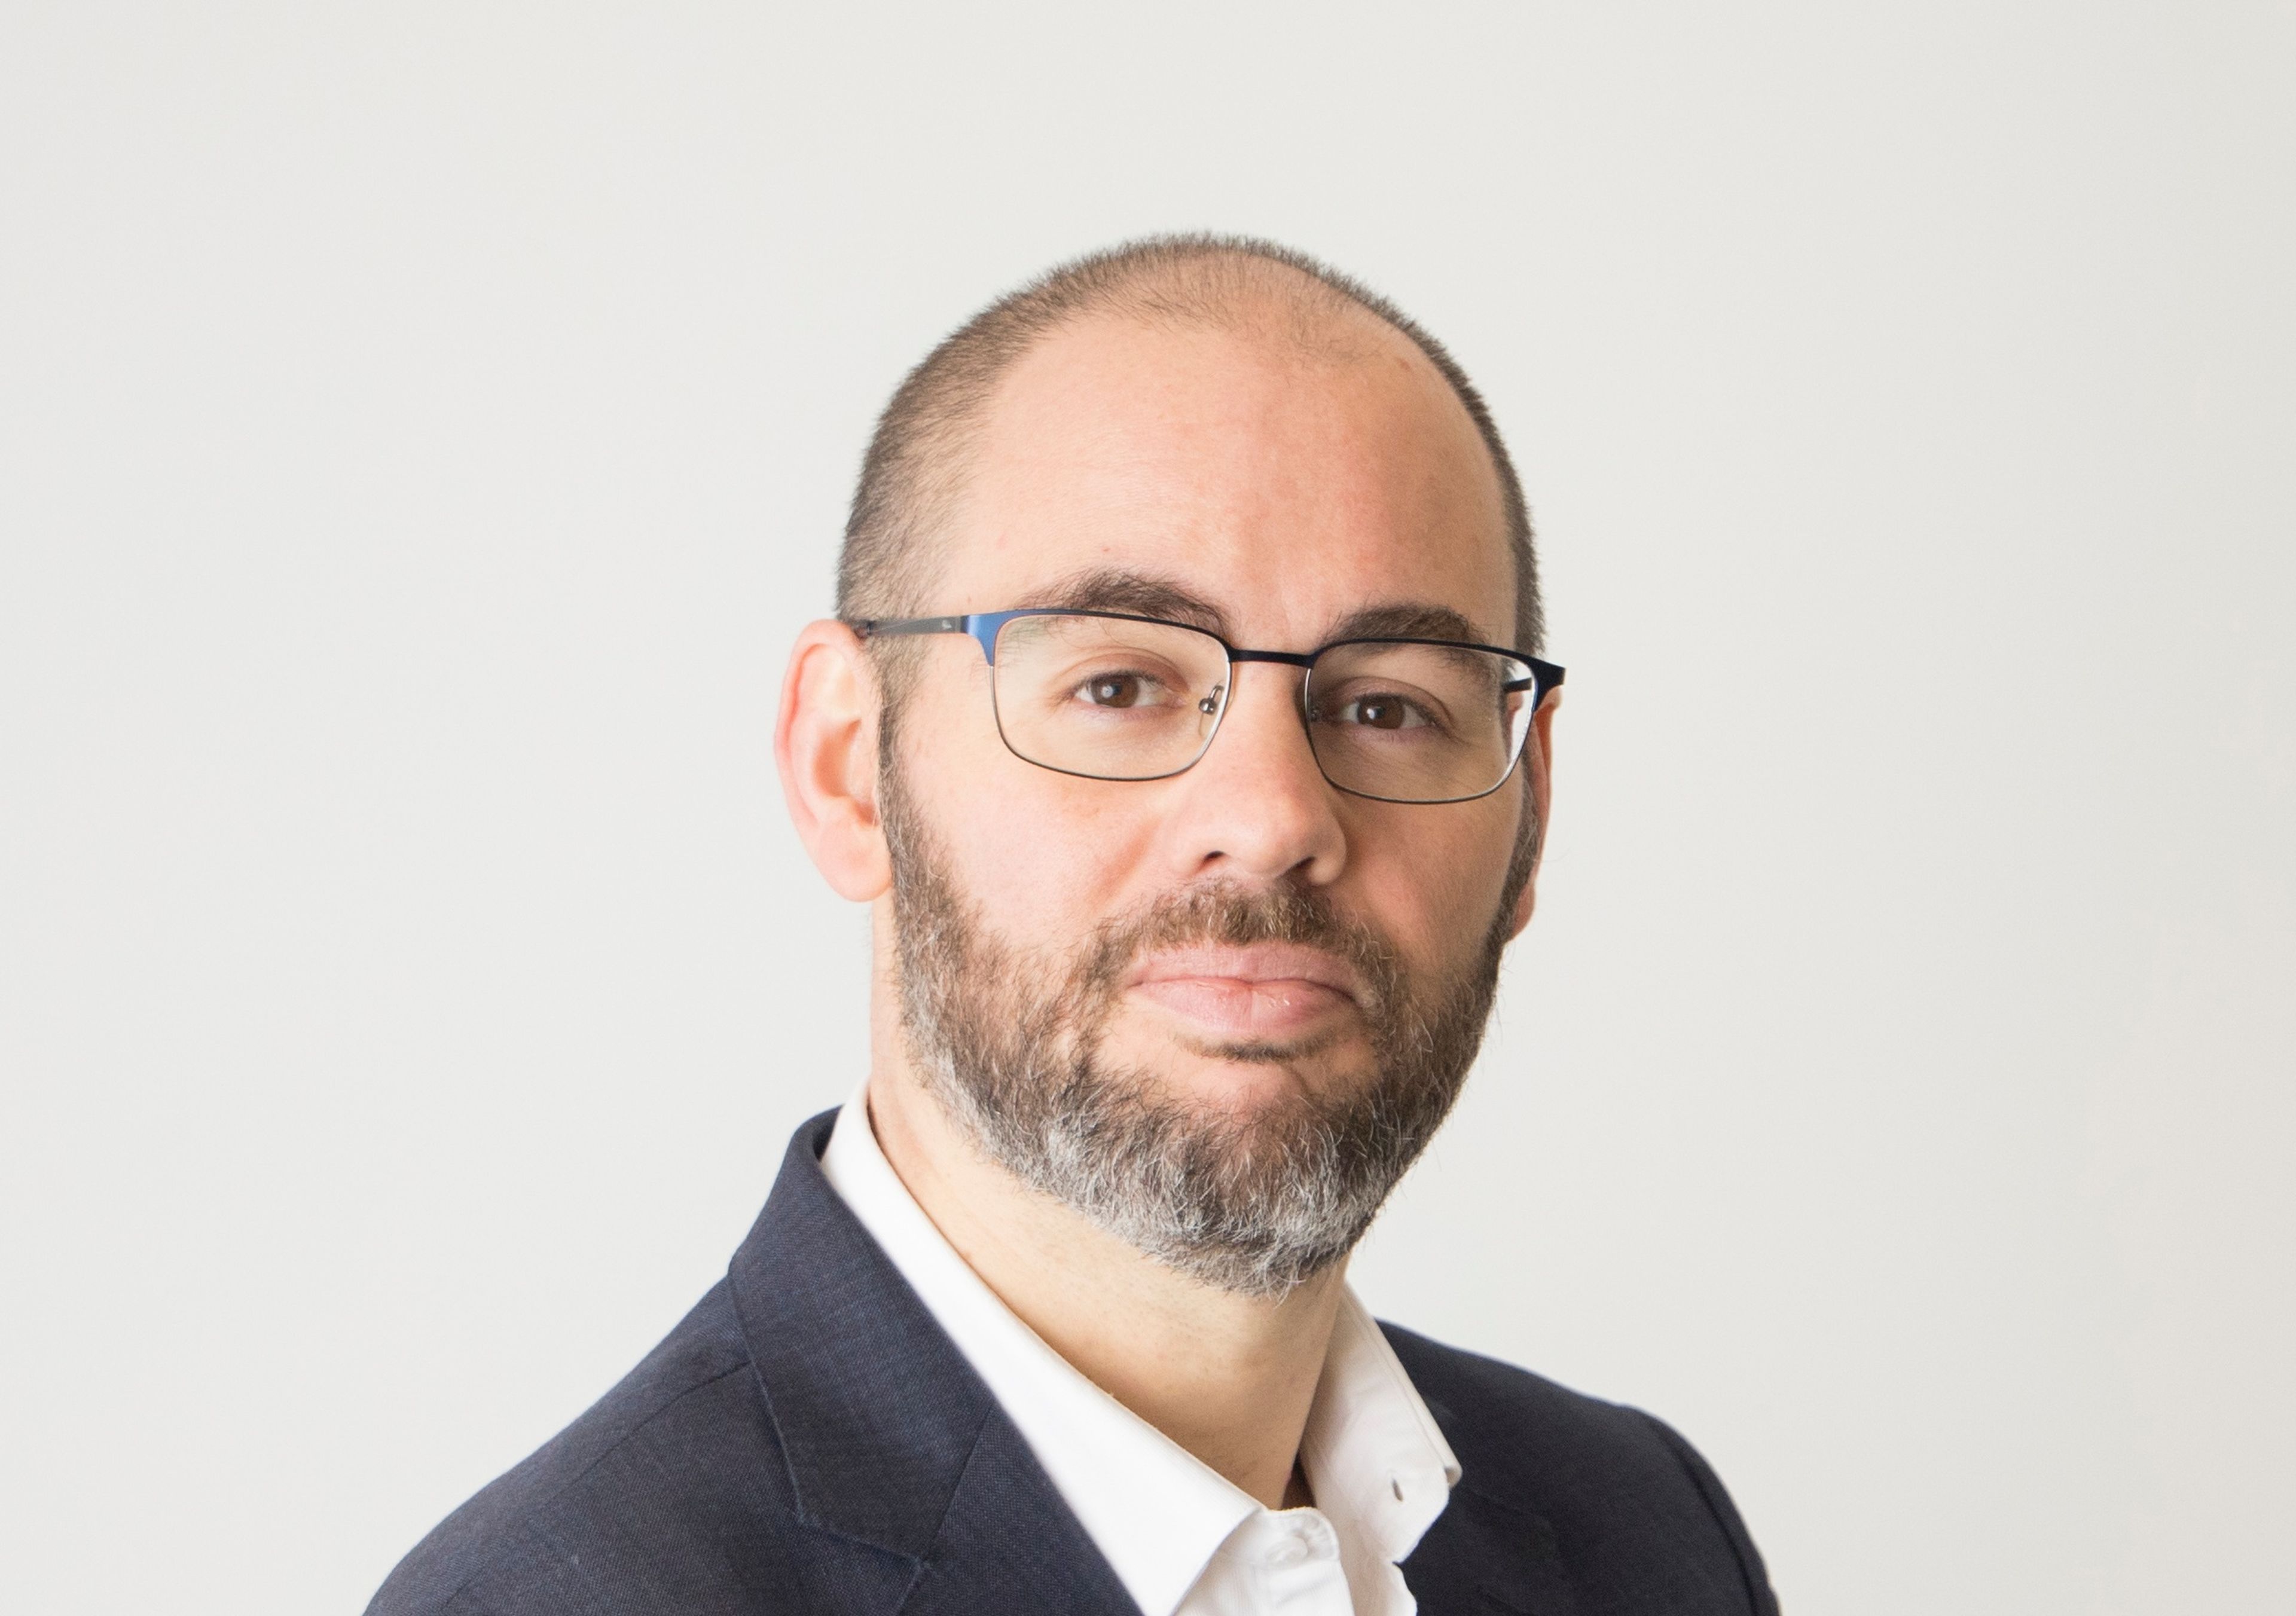 Unai Ansejo, CEO de Indexa Capital.